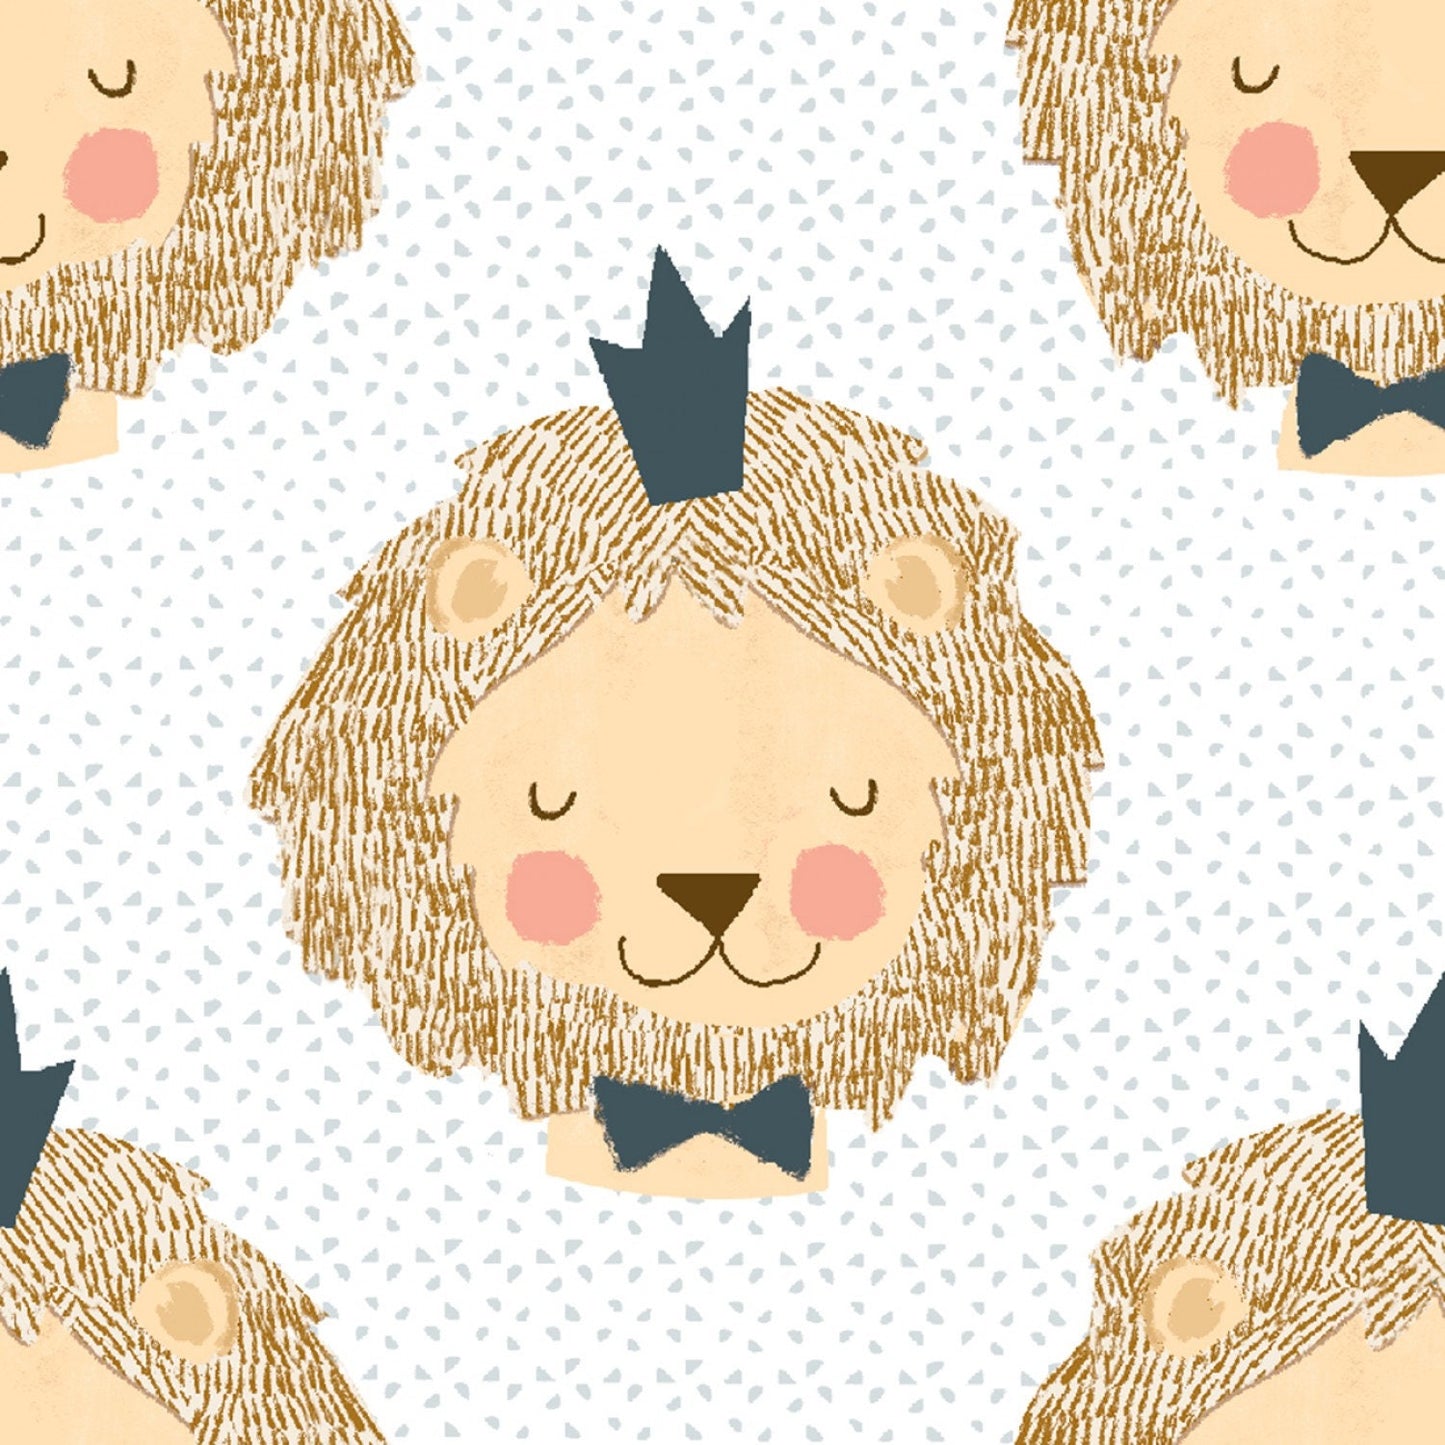 Little Lion King of Jungle 16062-WHT Cotton Woven Fabric